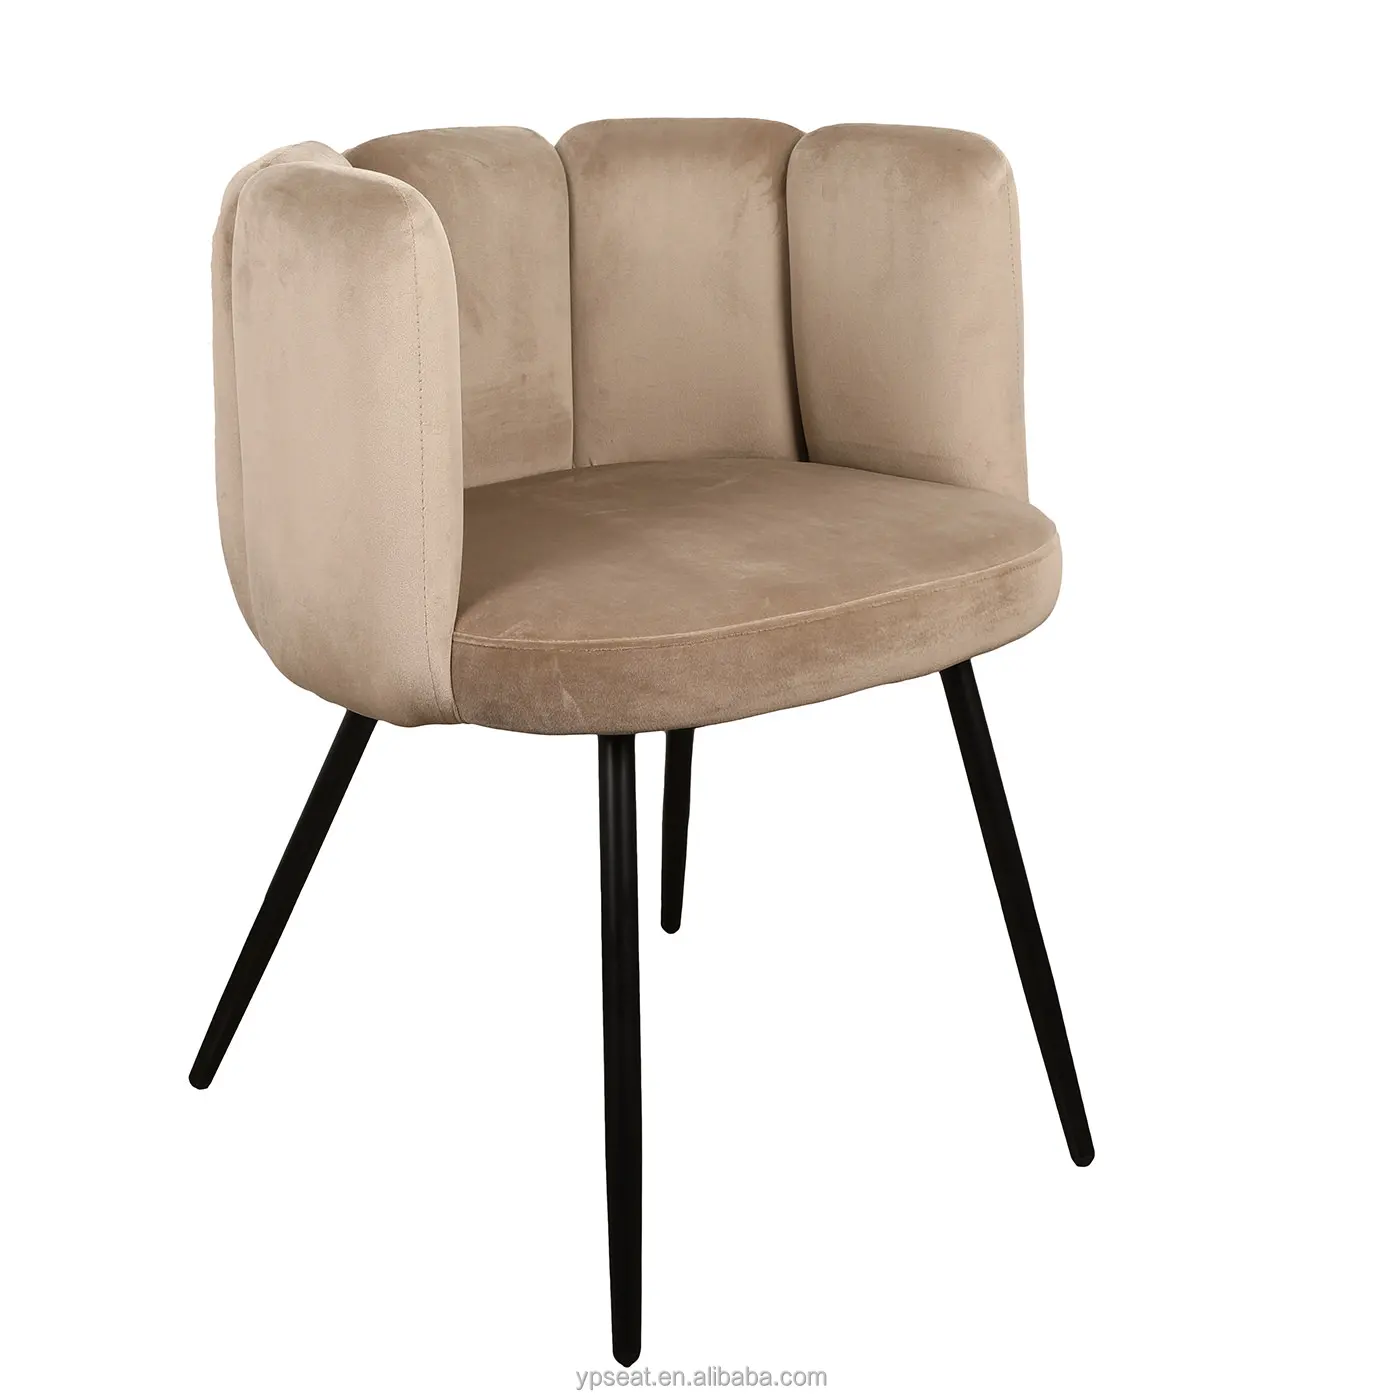 वेलवेट हेज़ असबाबवाला धातु जाल इतालवी कपड़े असबाबवाला लक्जरी आर्मचेयर आर्मरेस्ट के साथ न्यूनतम डाइनिंग कुर्सी